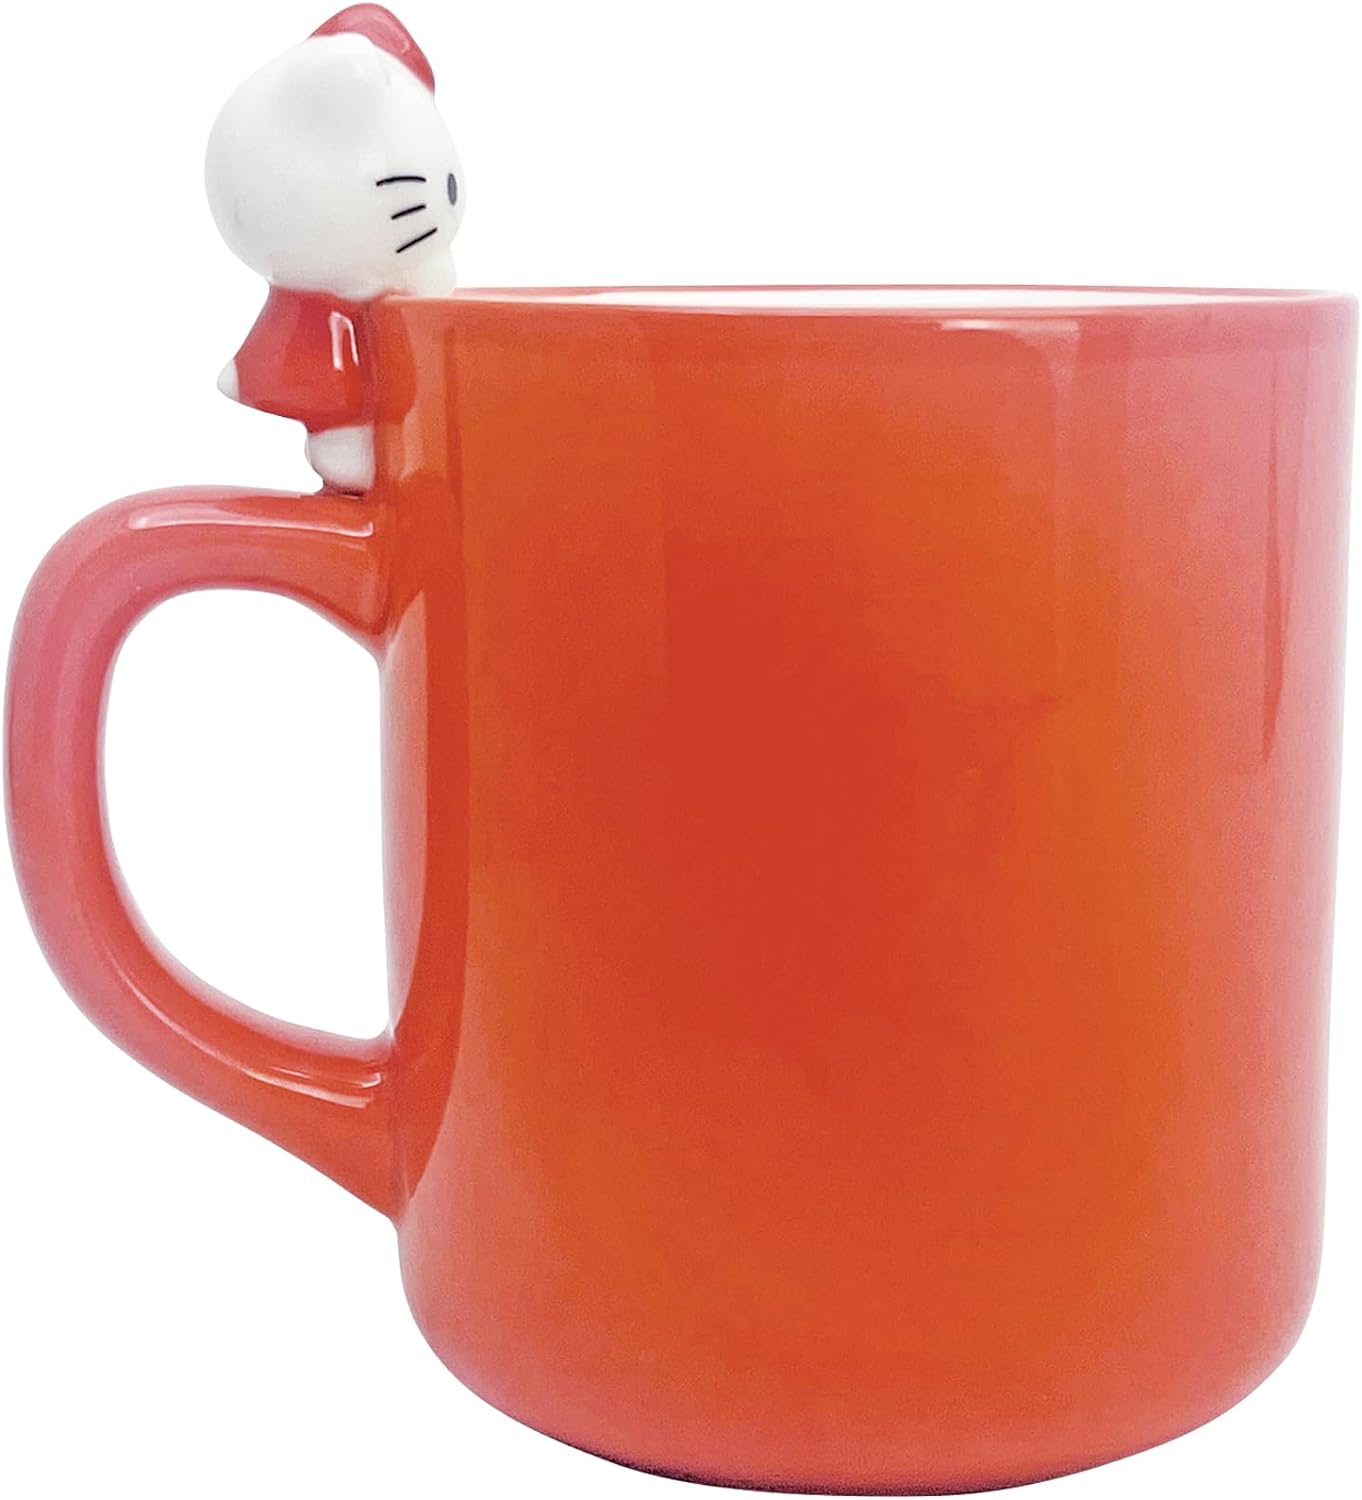 Sanrio Characters Mug with Figure